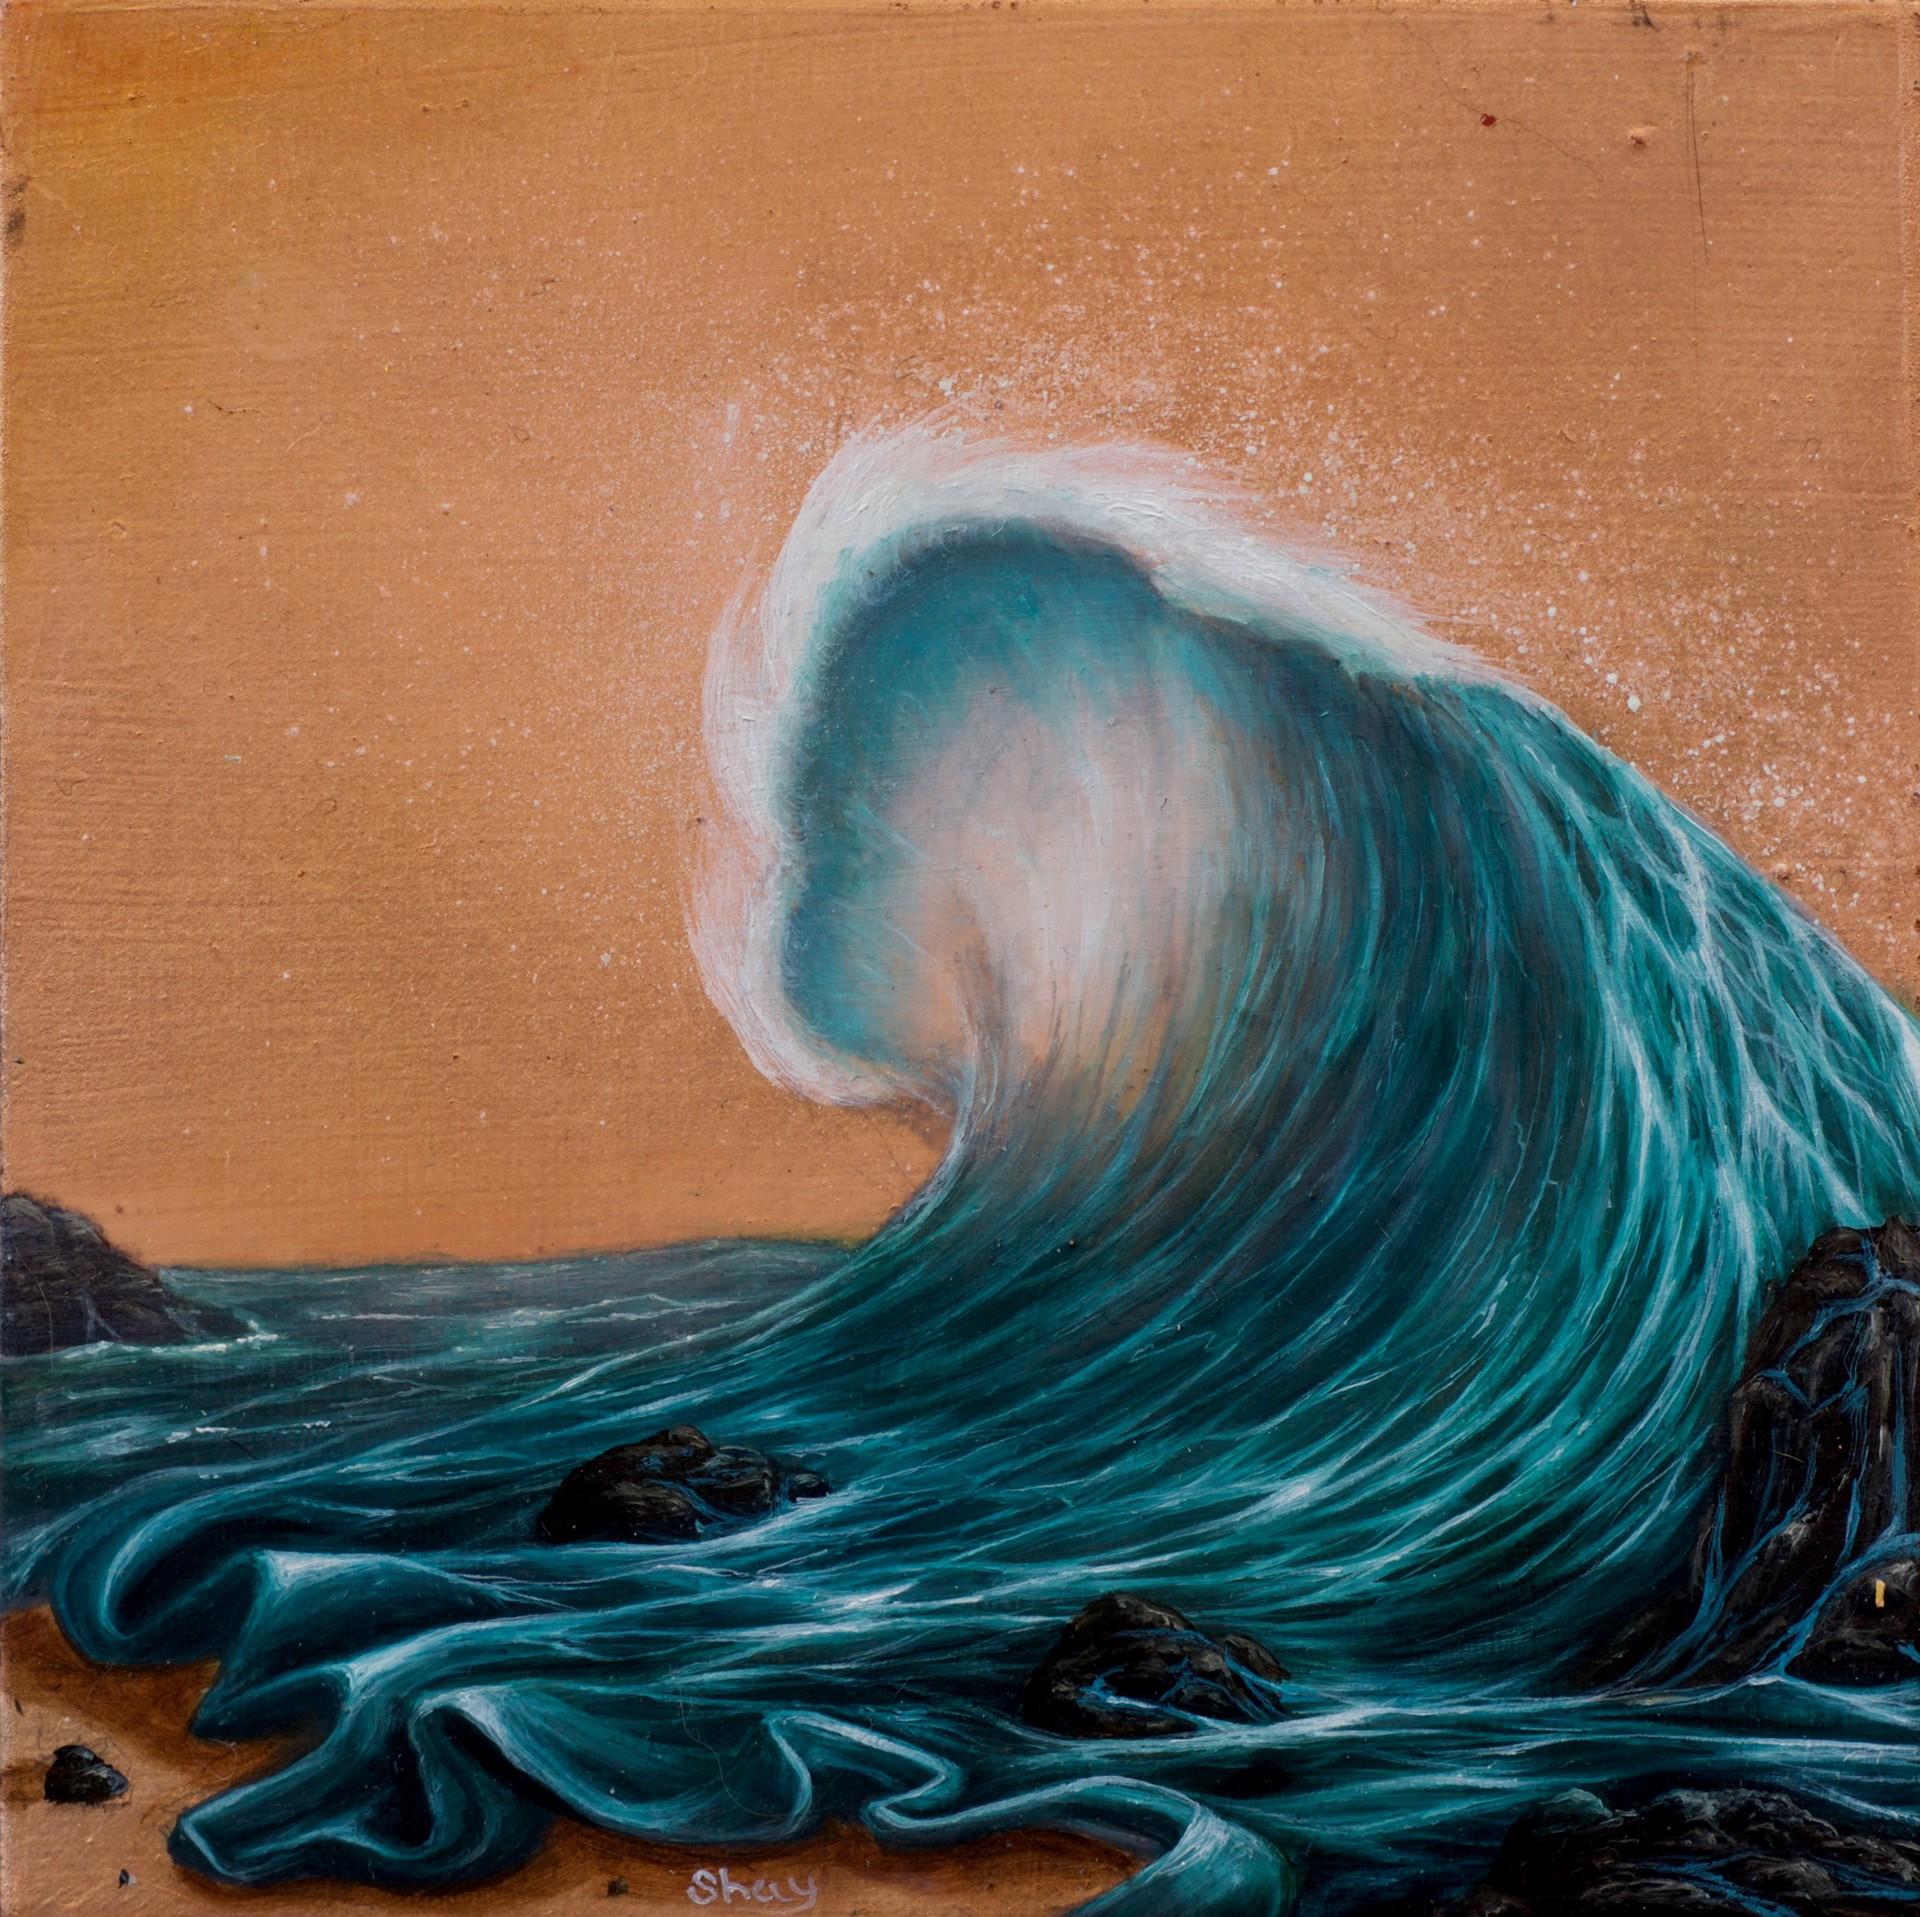 The Warm Wave - Art by Shay Davis